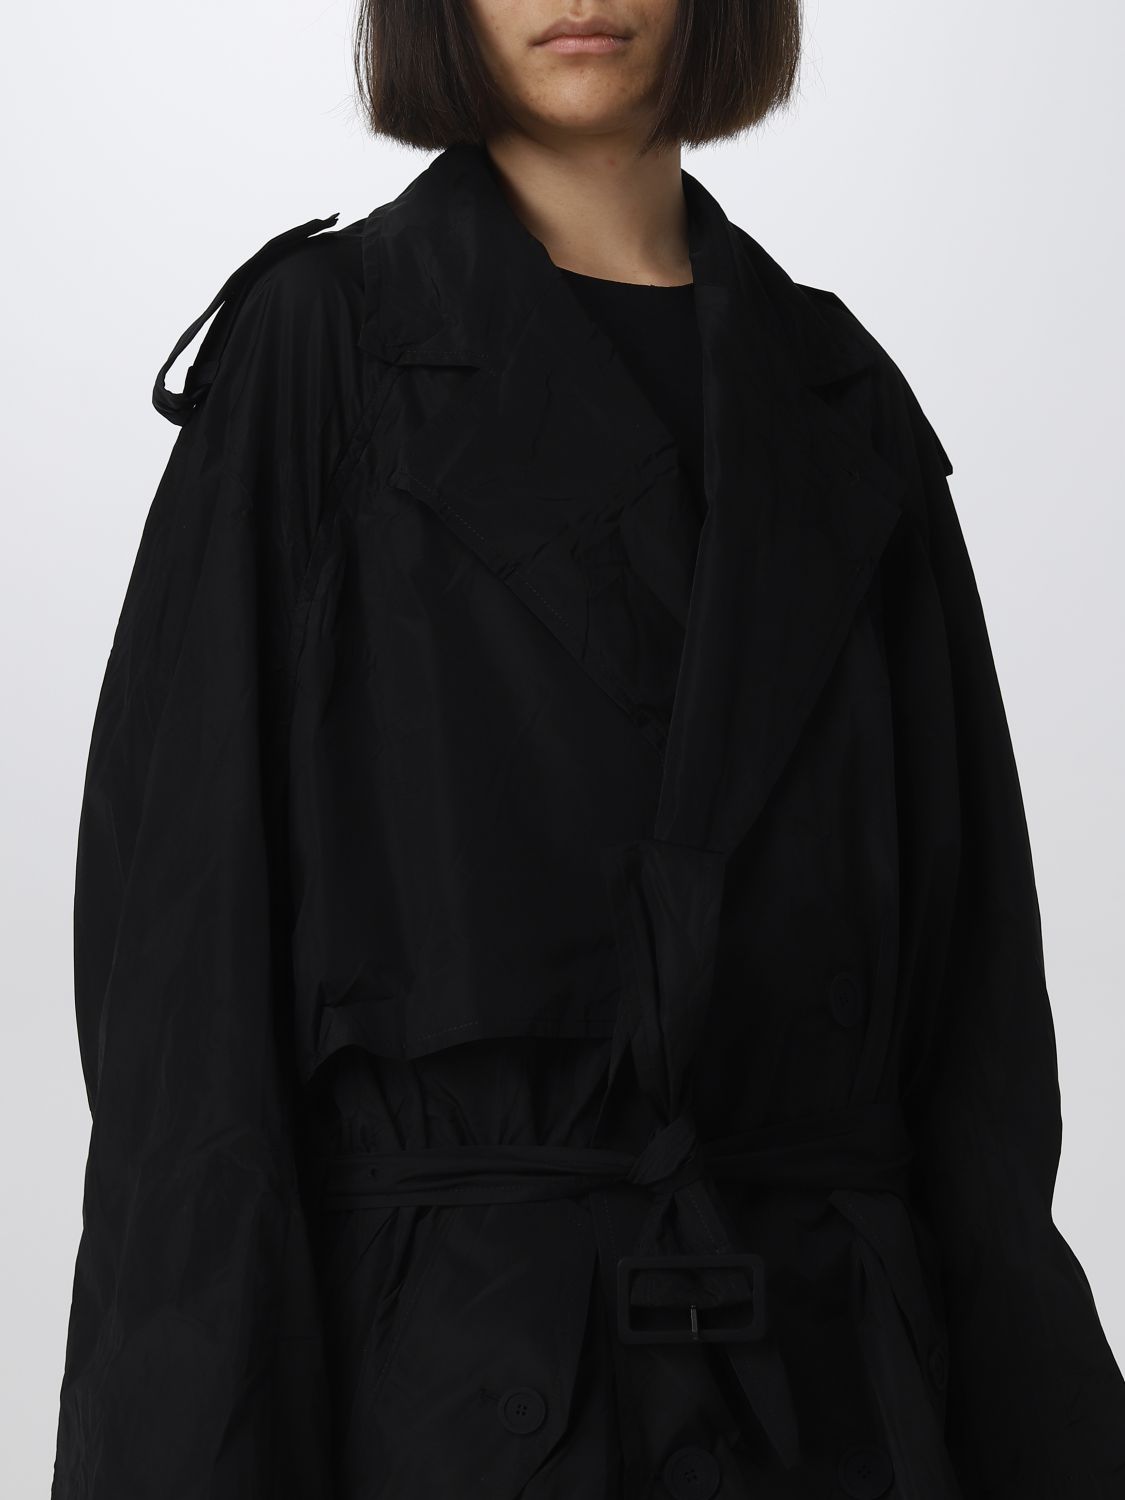 Buy Balenciaga women black evening trench dress for €2,180 online on SV77,  675383/TLO28/1000